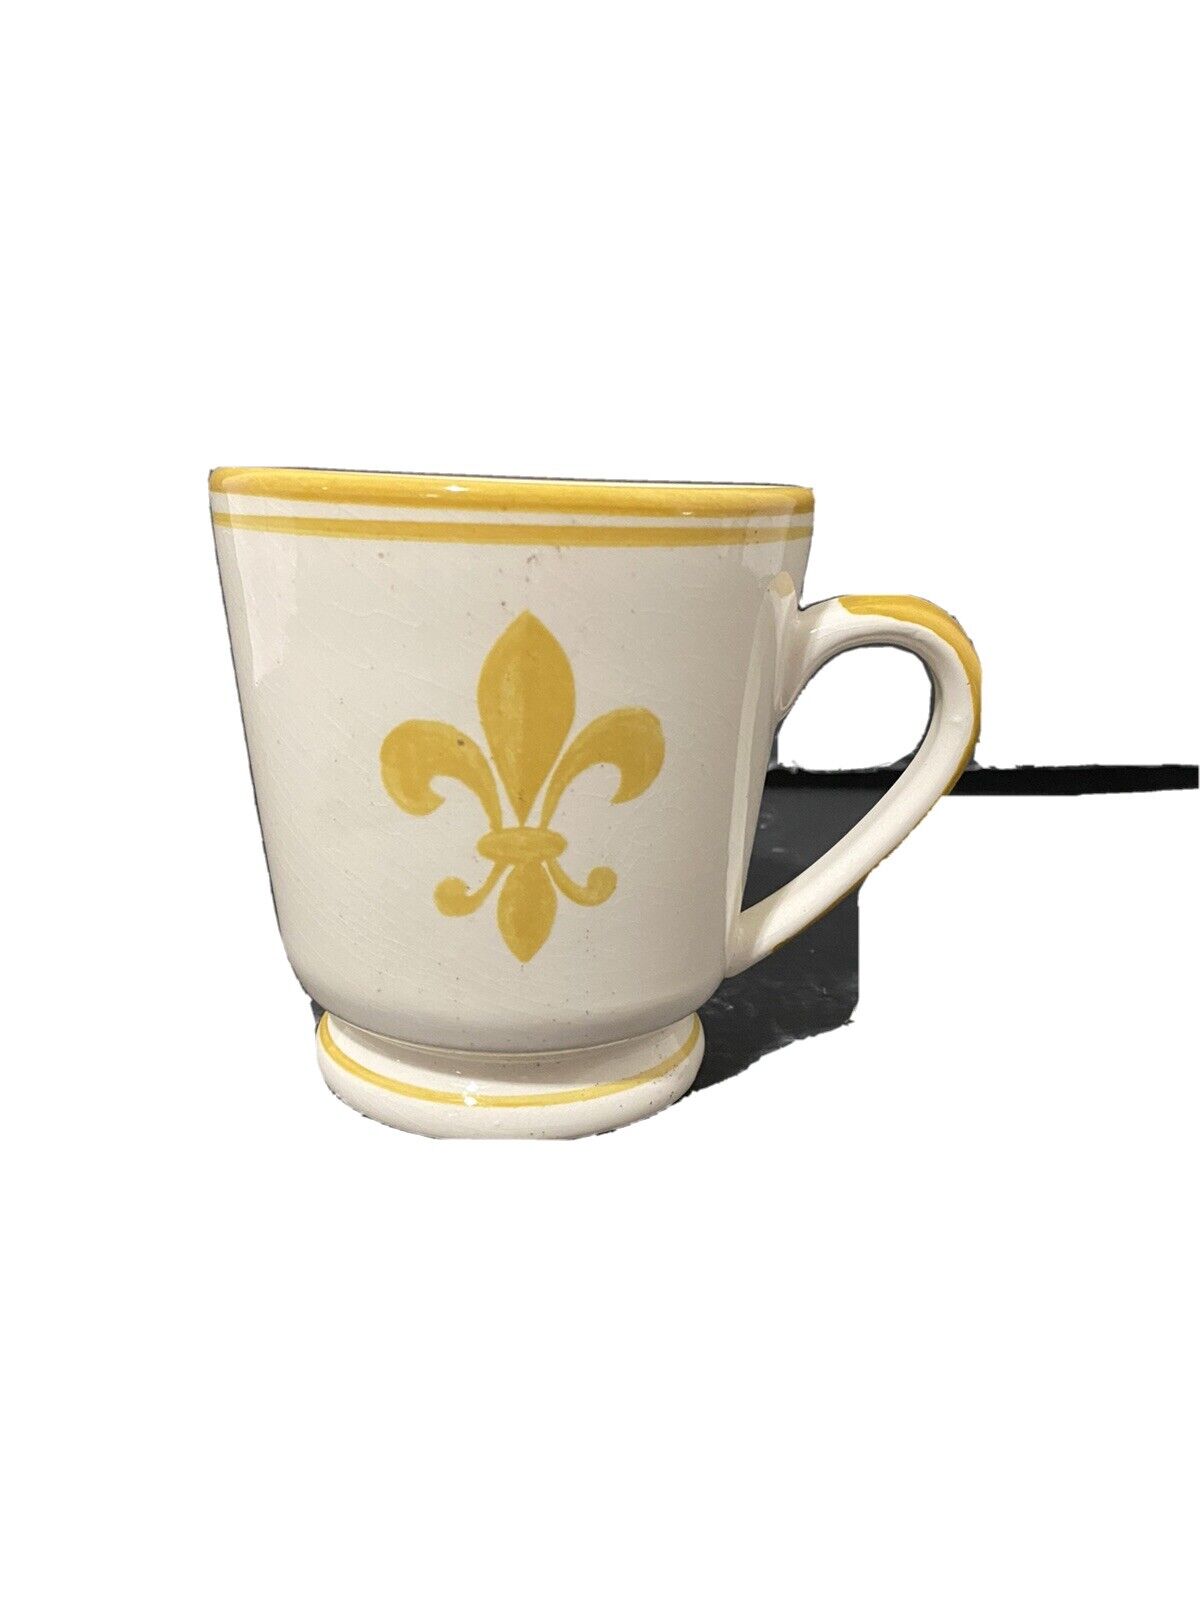 Williams Sonoma Fleur De Lis Coffee Mug Tea Cup Yellow and Cream Ceramic New